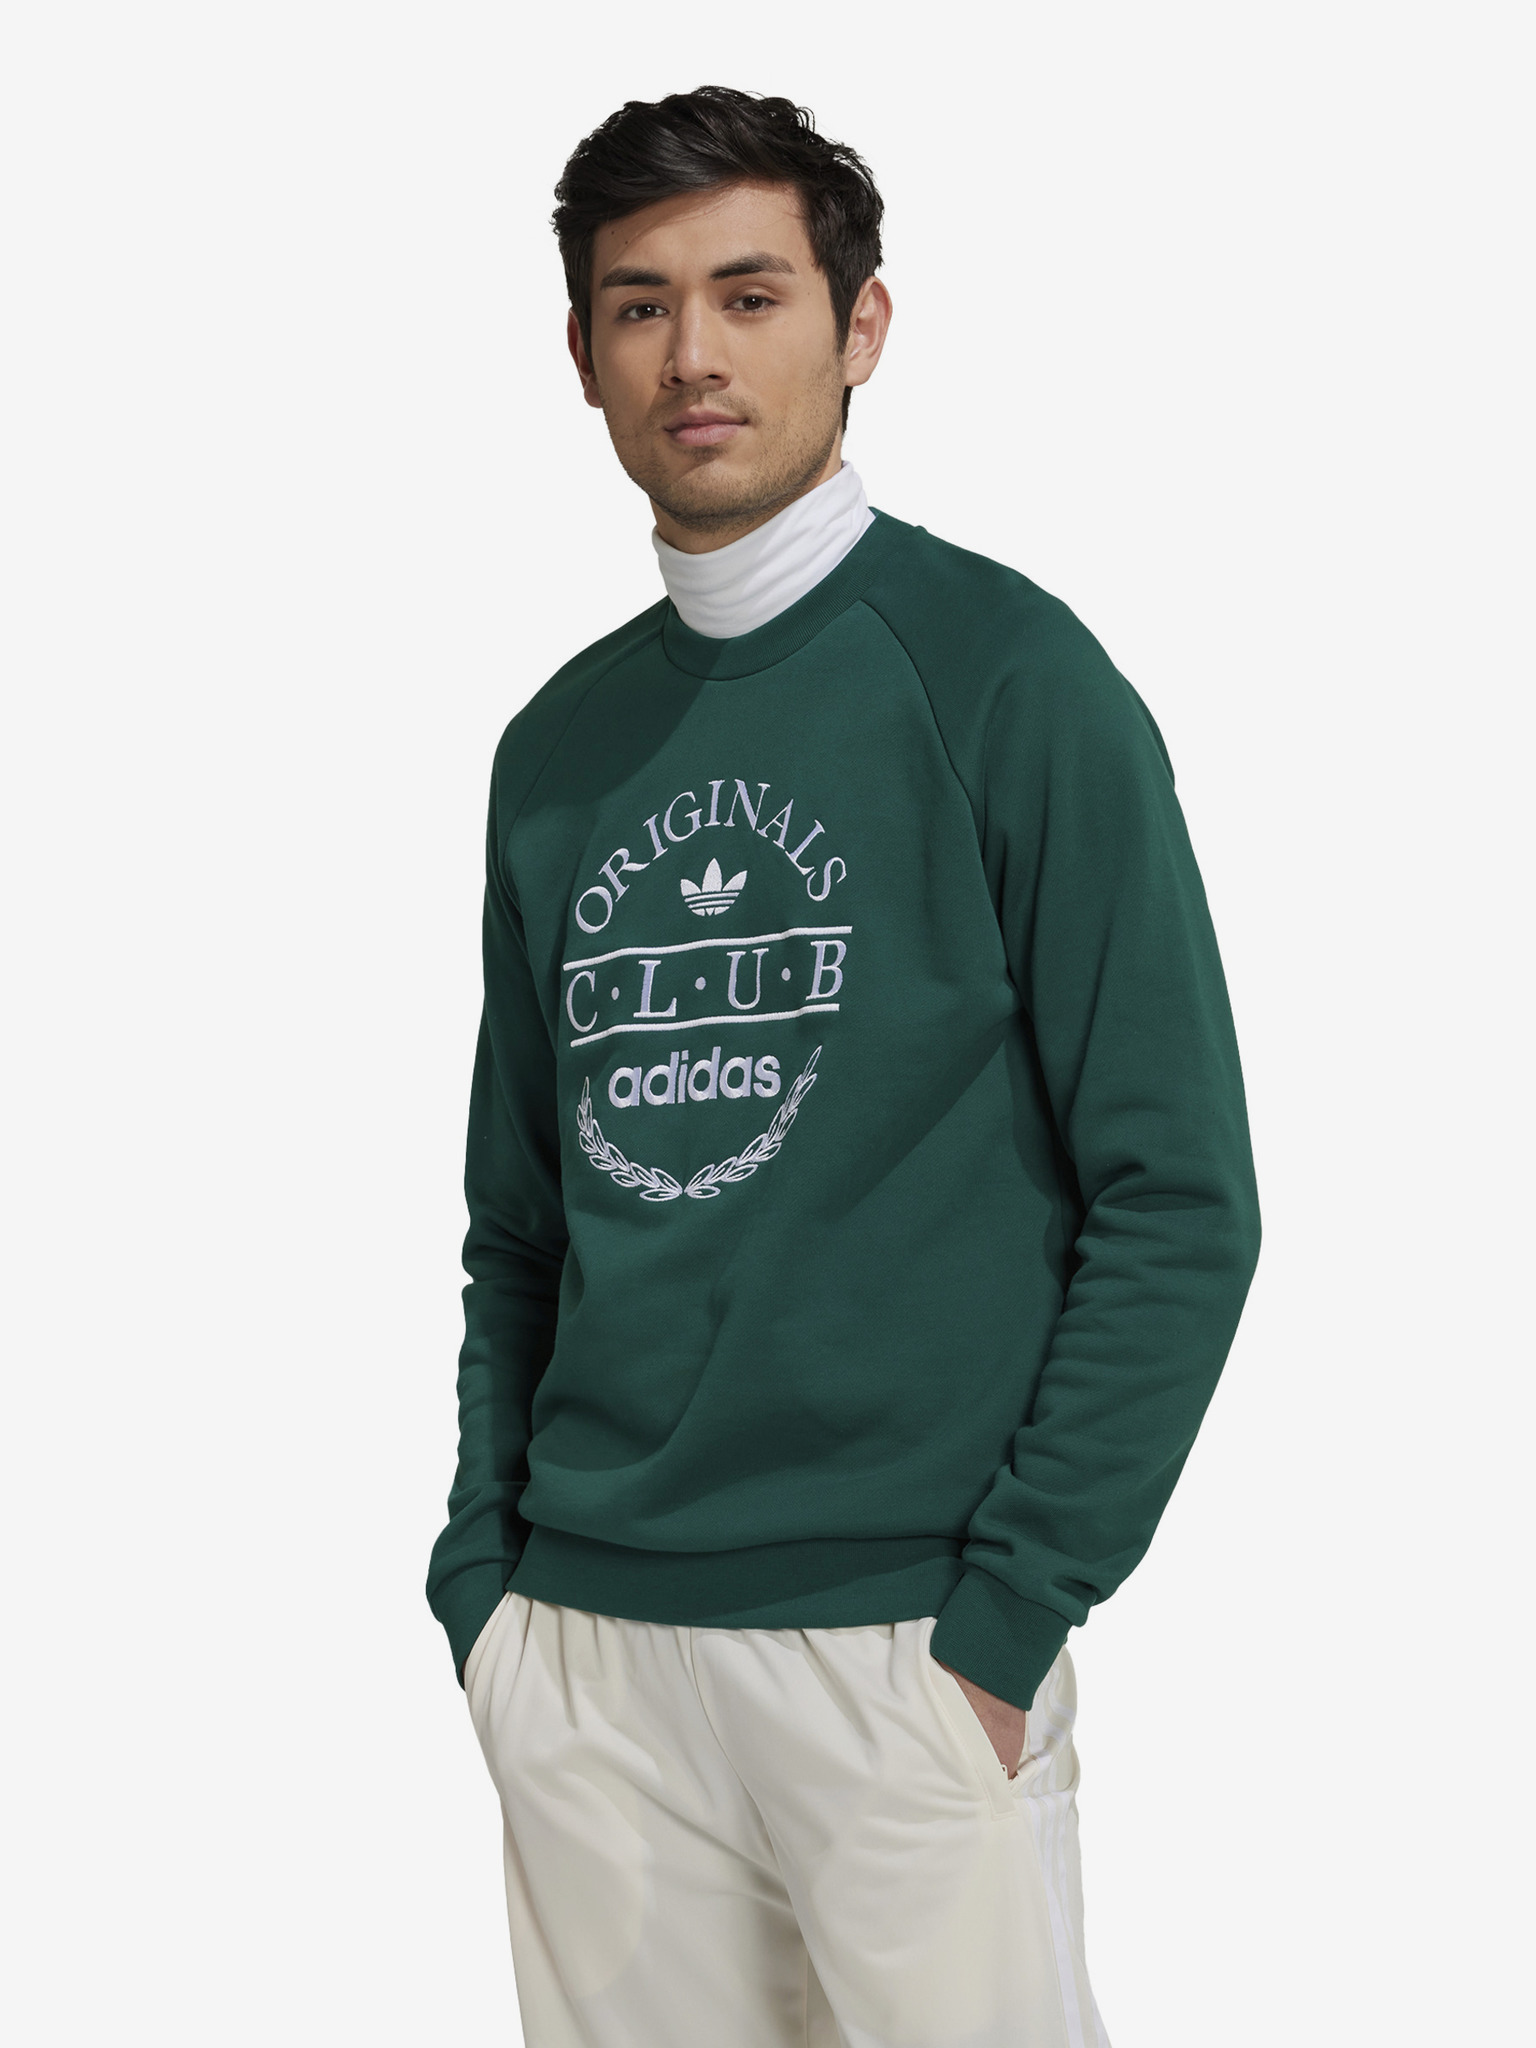 Sweatshirt Club adidas Originals -